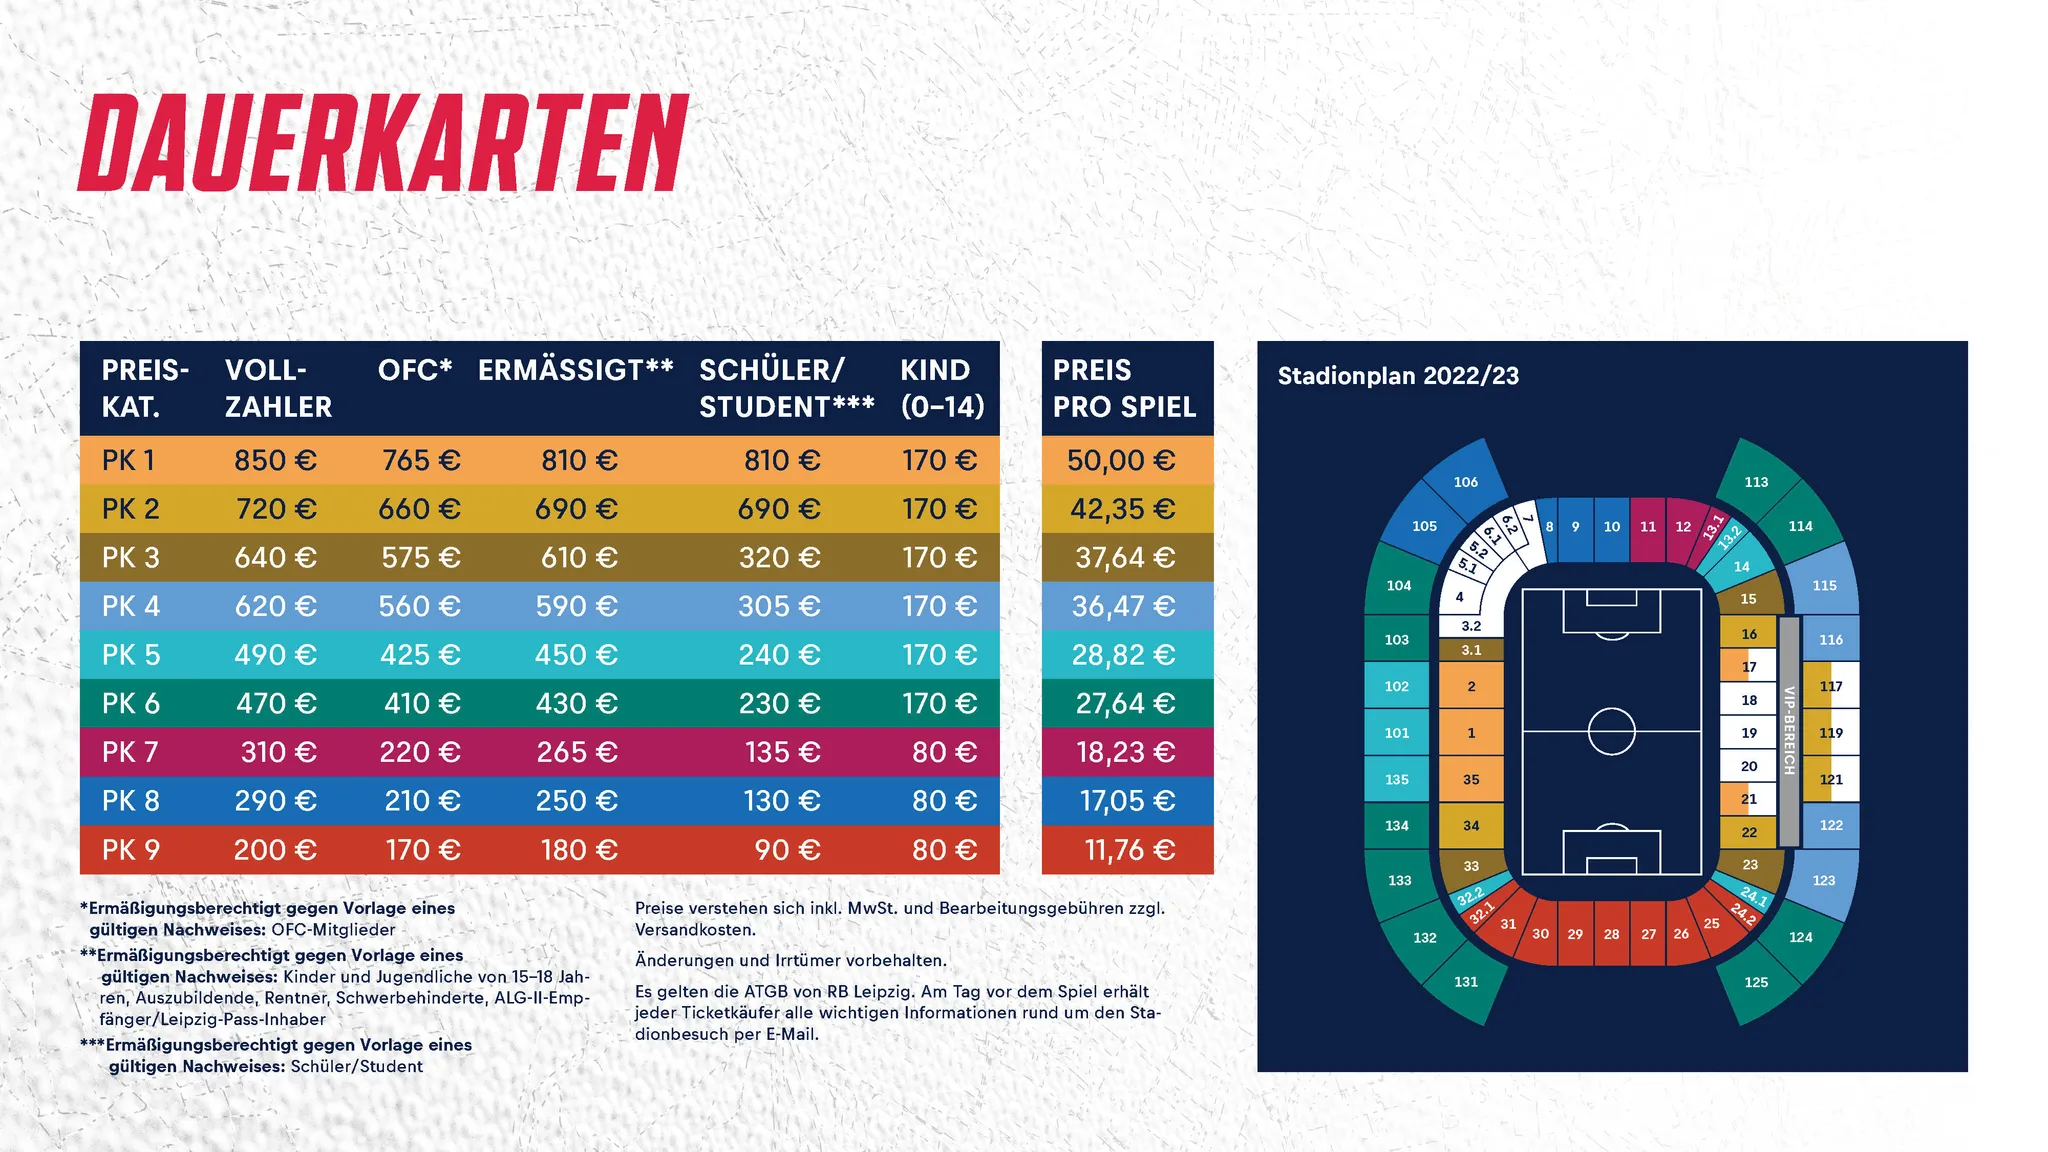 Preisliste-RB-Leipzig-Dauerkarte-Saison-2022-2023 (Bild)